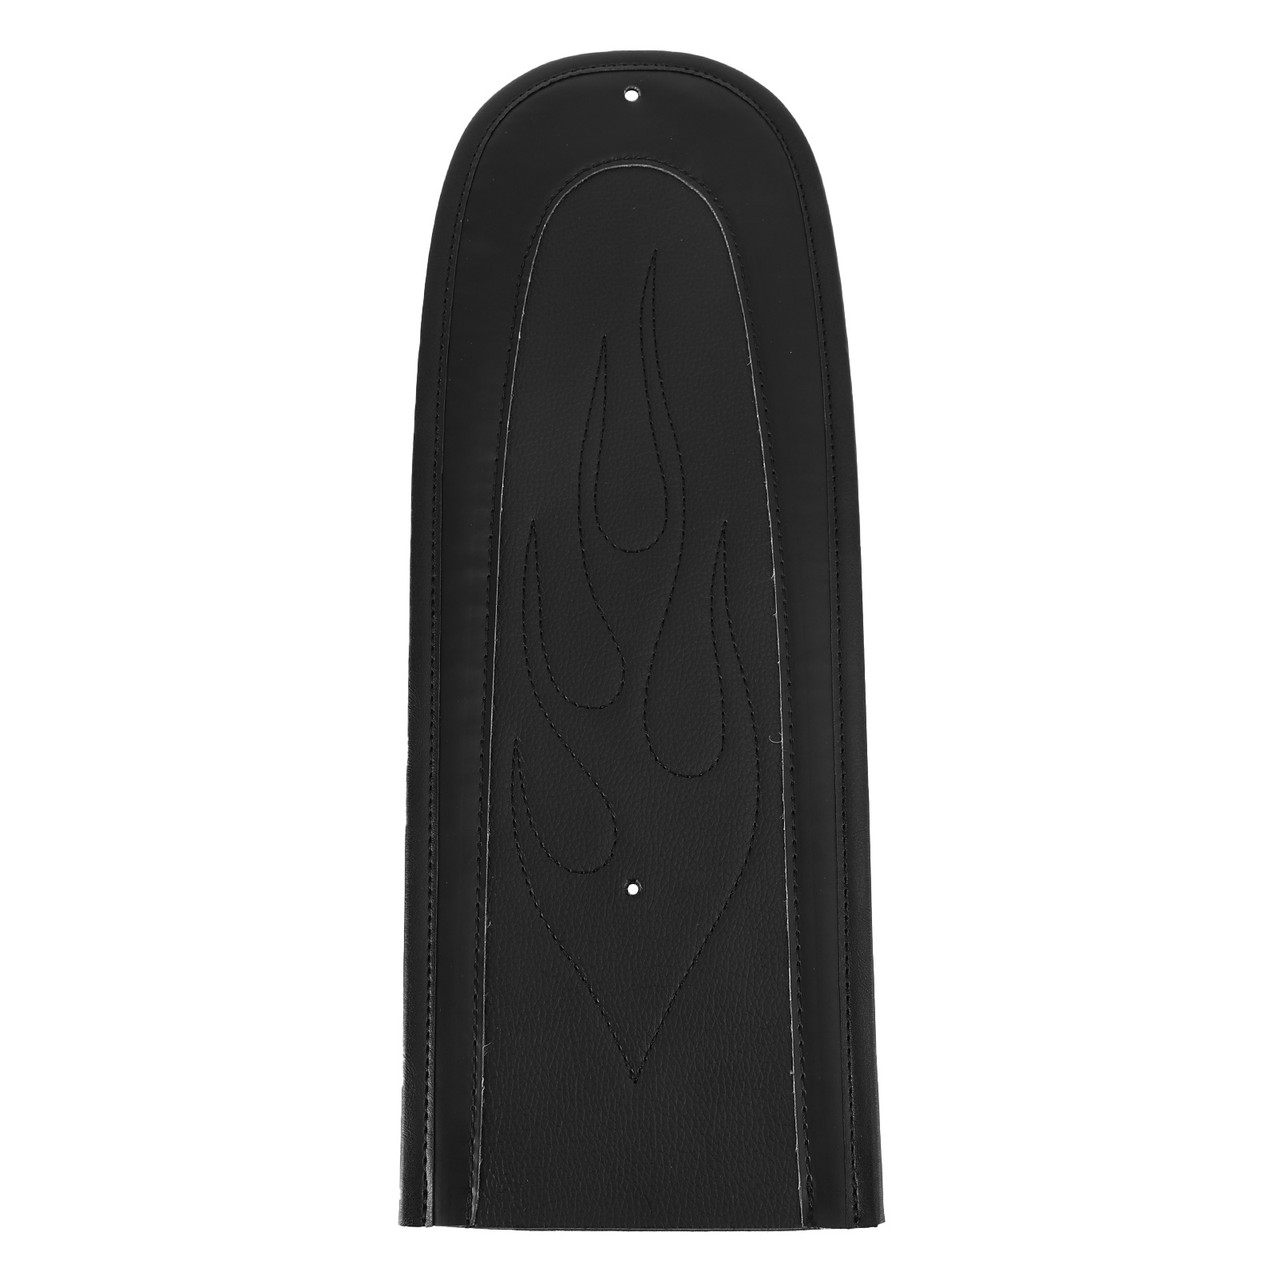 DYNAFIT Black Flame Stitch PU Leather Rear Seat Fender Bib Fit For Dyna Super Glide FN 